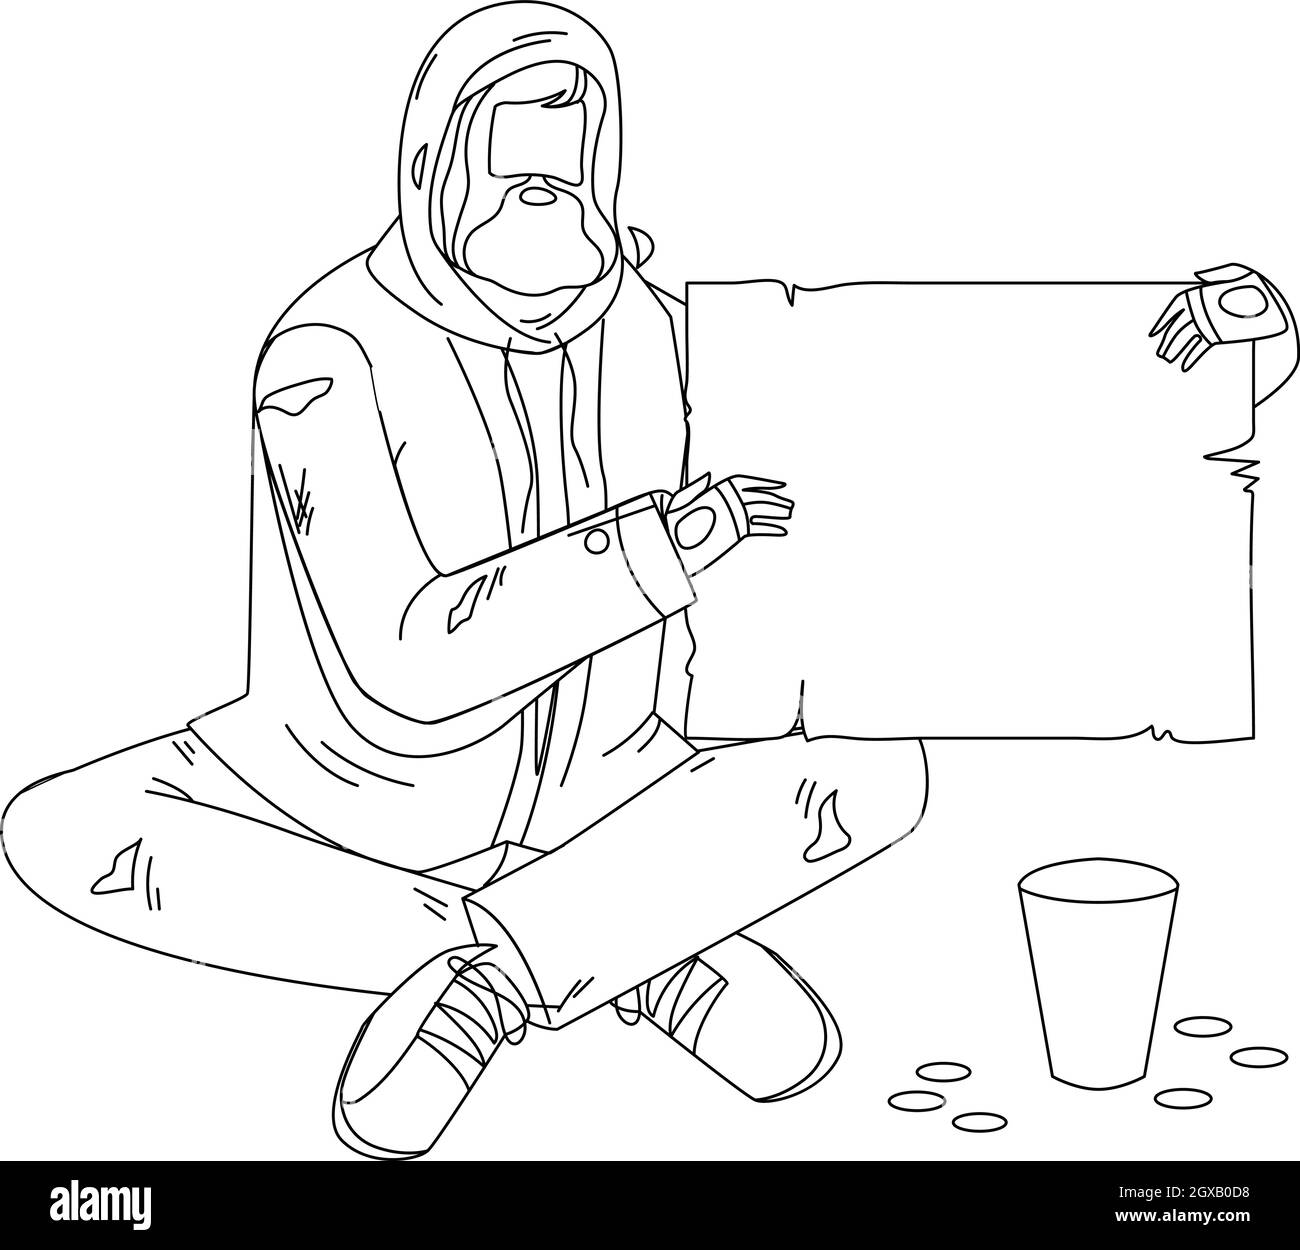 Begging hand. Sketch illustration of a hand gesture. | CanStock